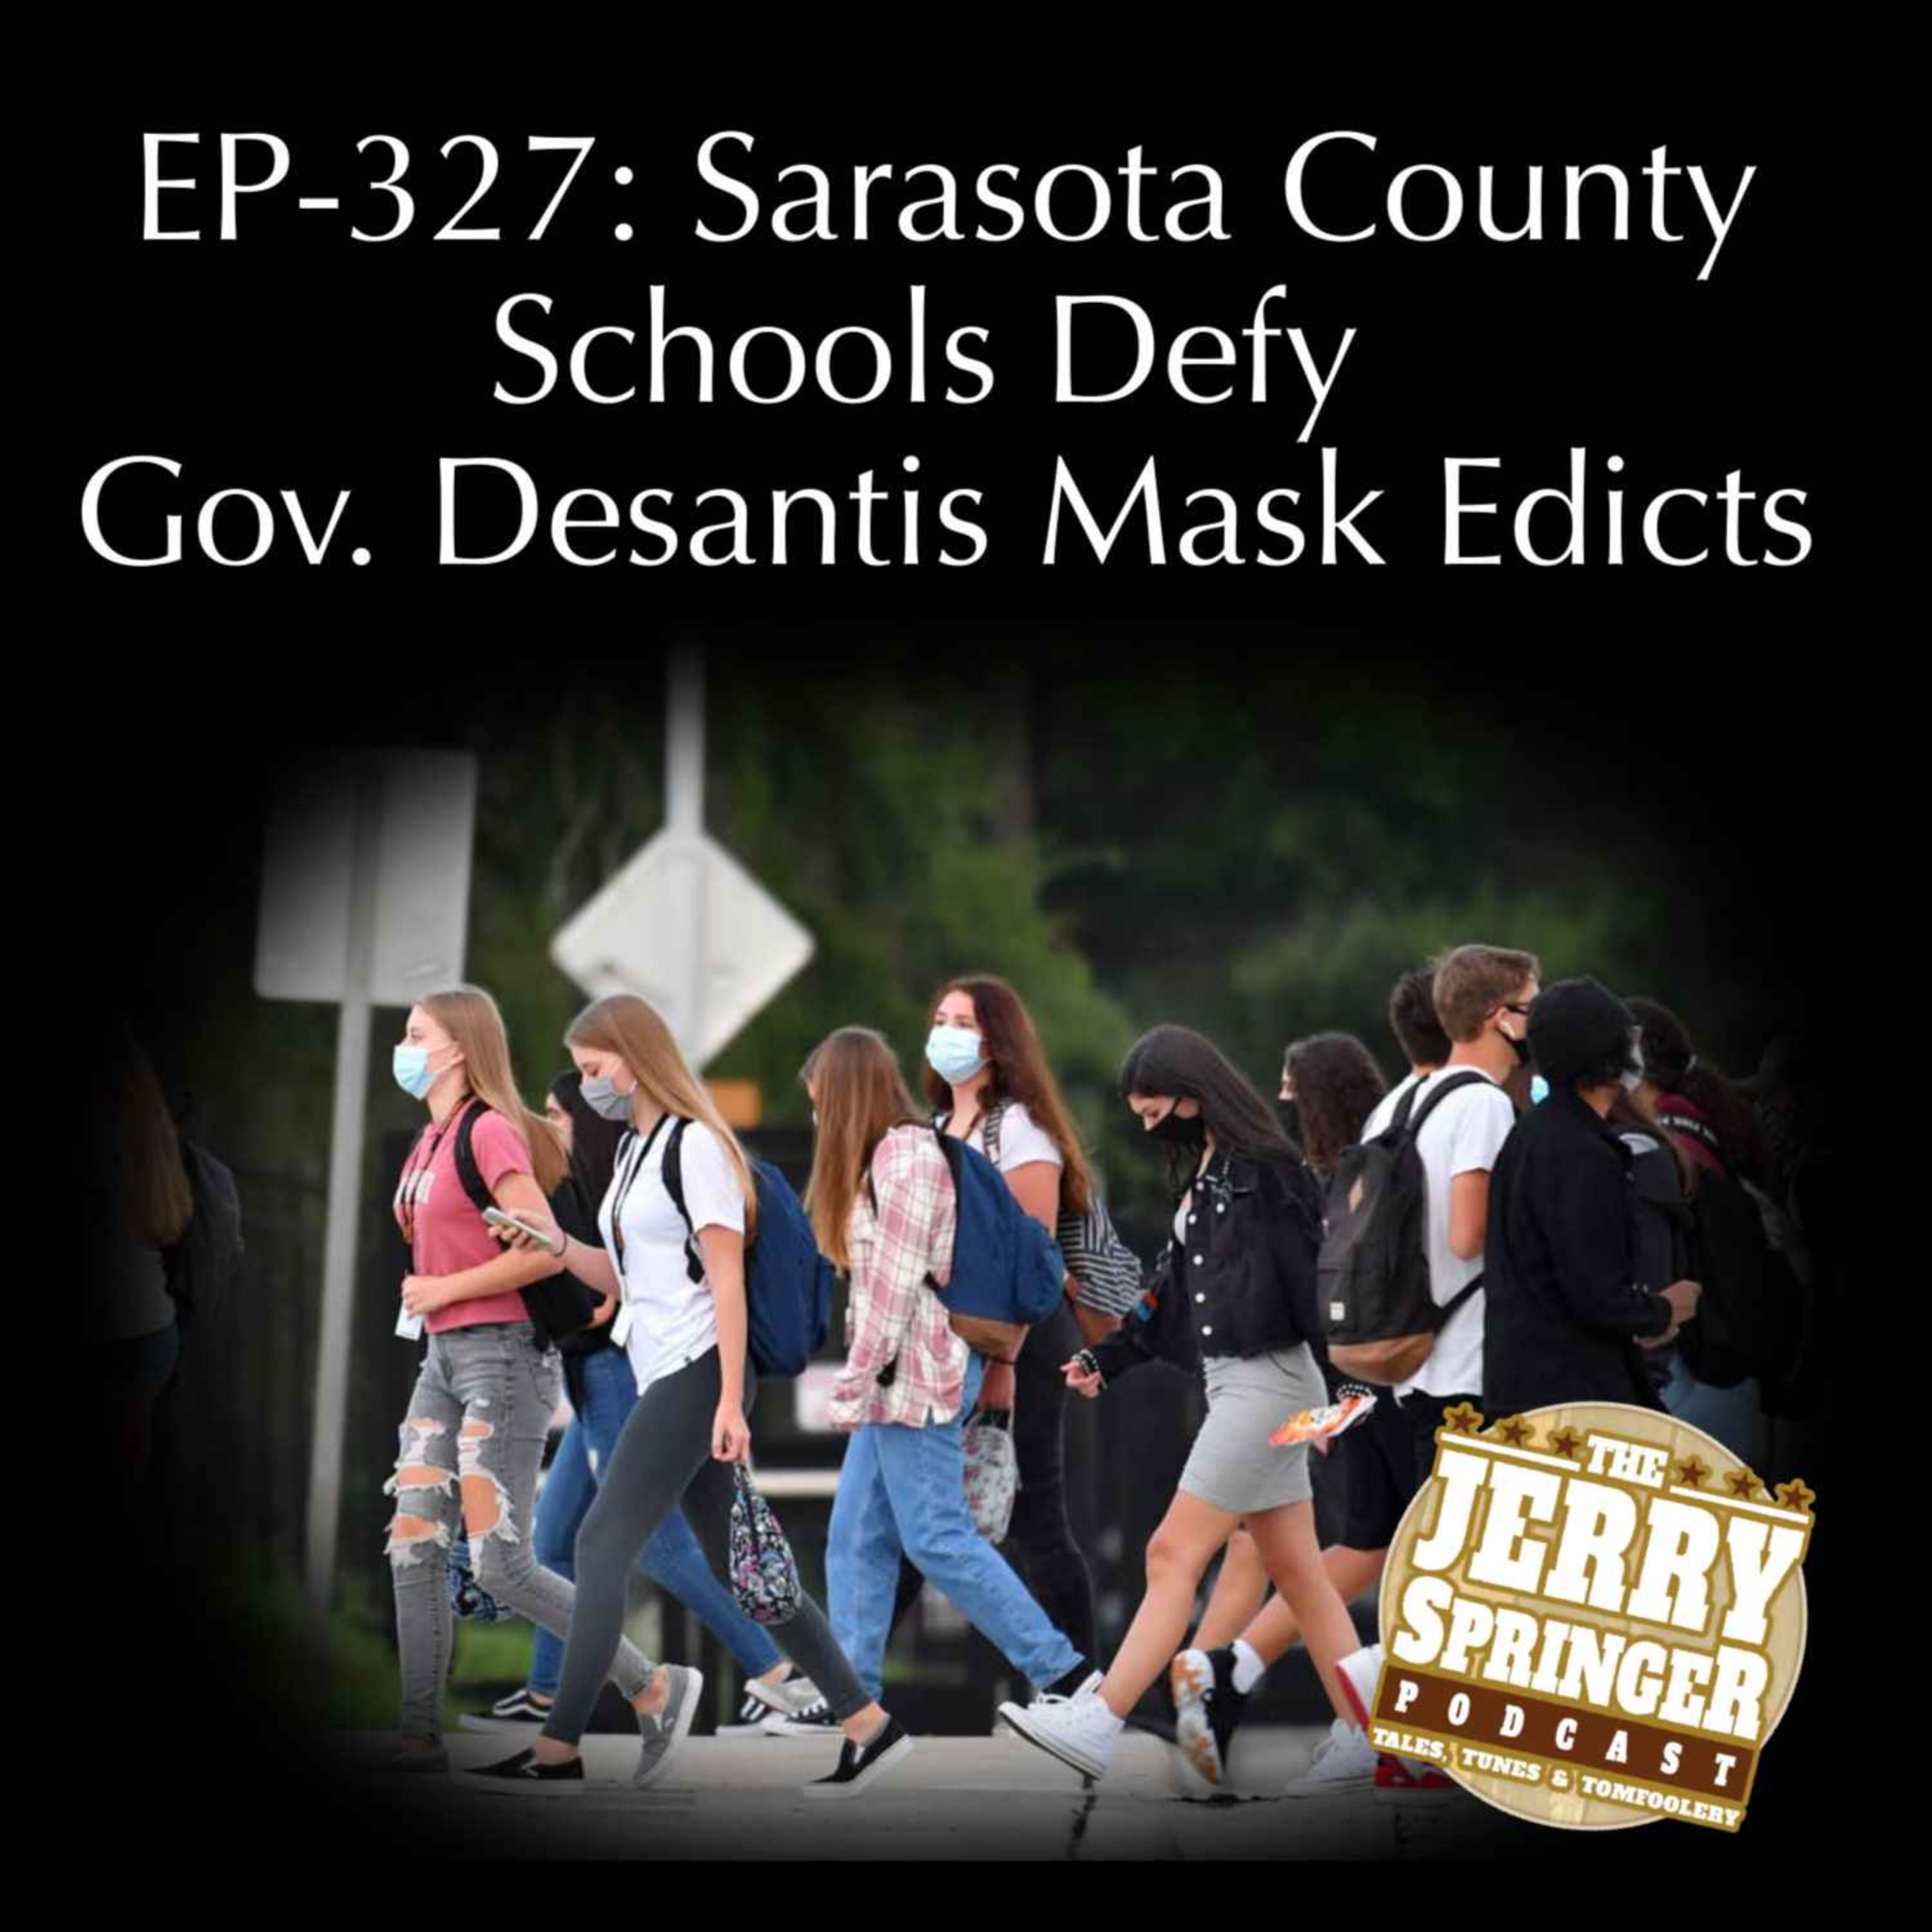 Sarasota County Schools Defy Gov. Desantis Mask Edicts: EP327